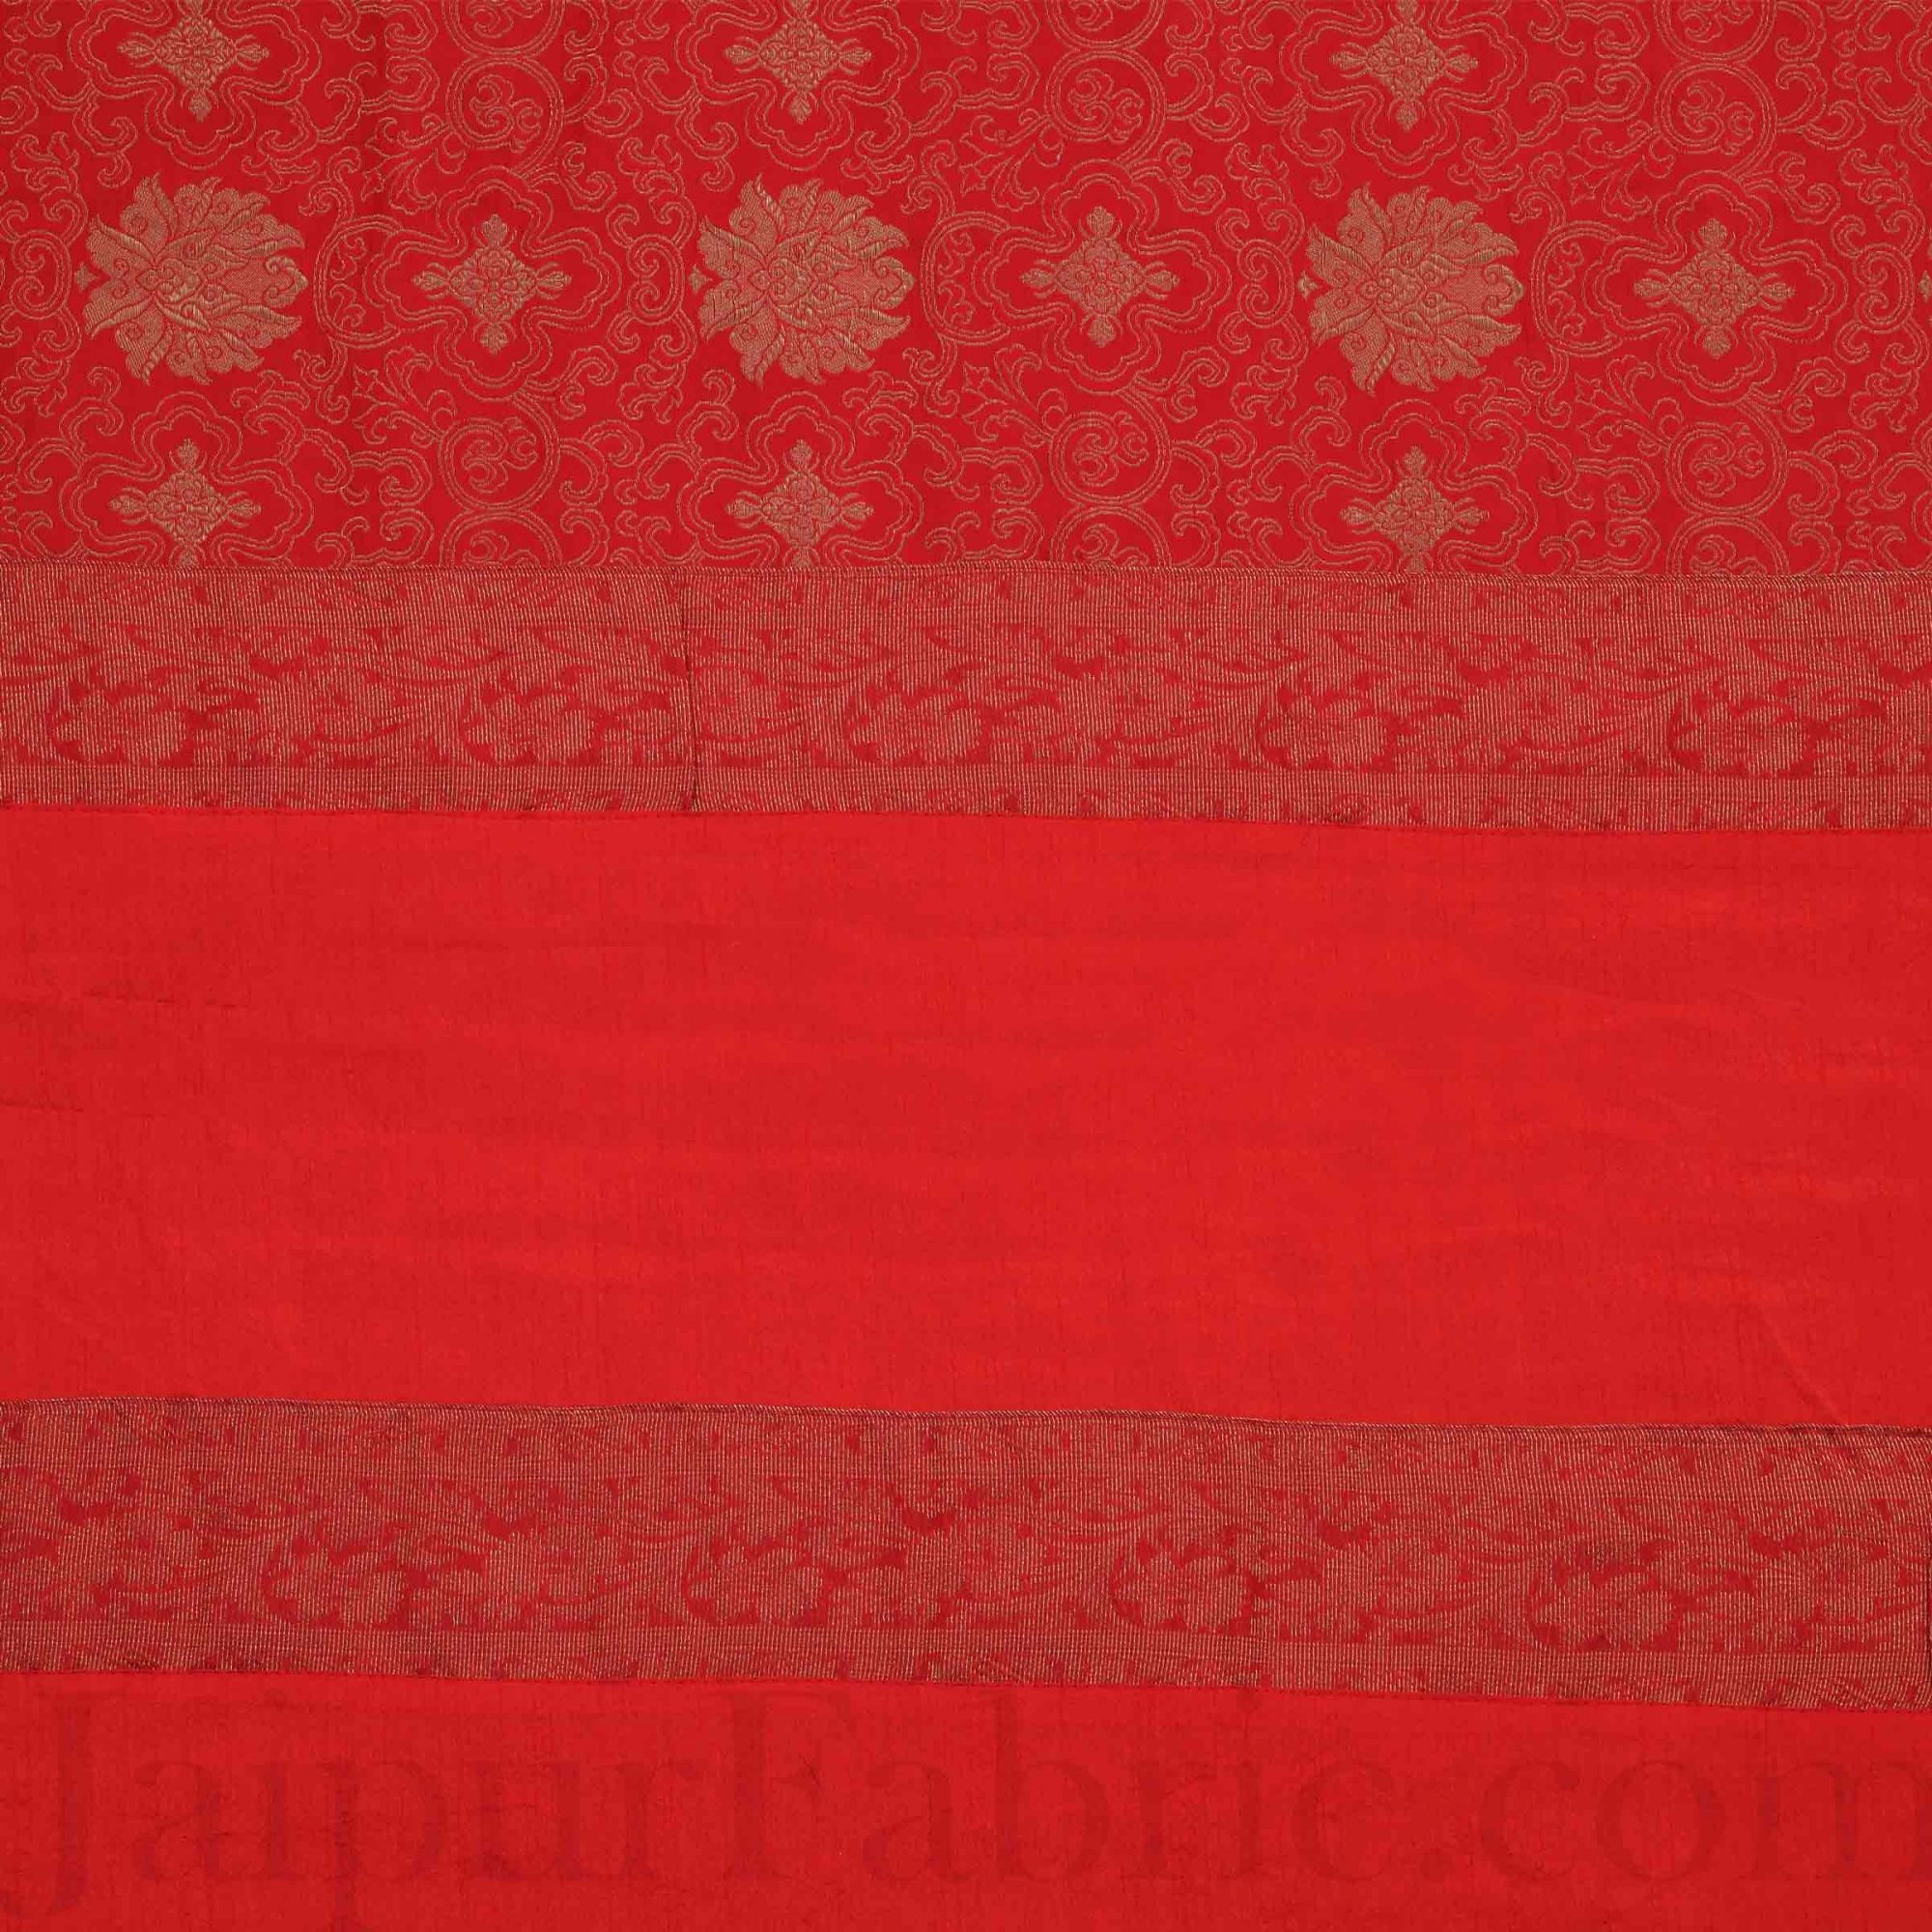 Radish Orange Rajasthani Zari Embroidered Lace Work Silk Double Bedsheet